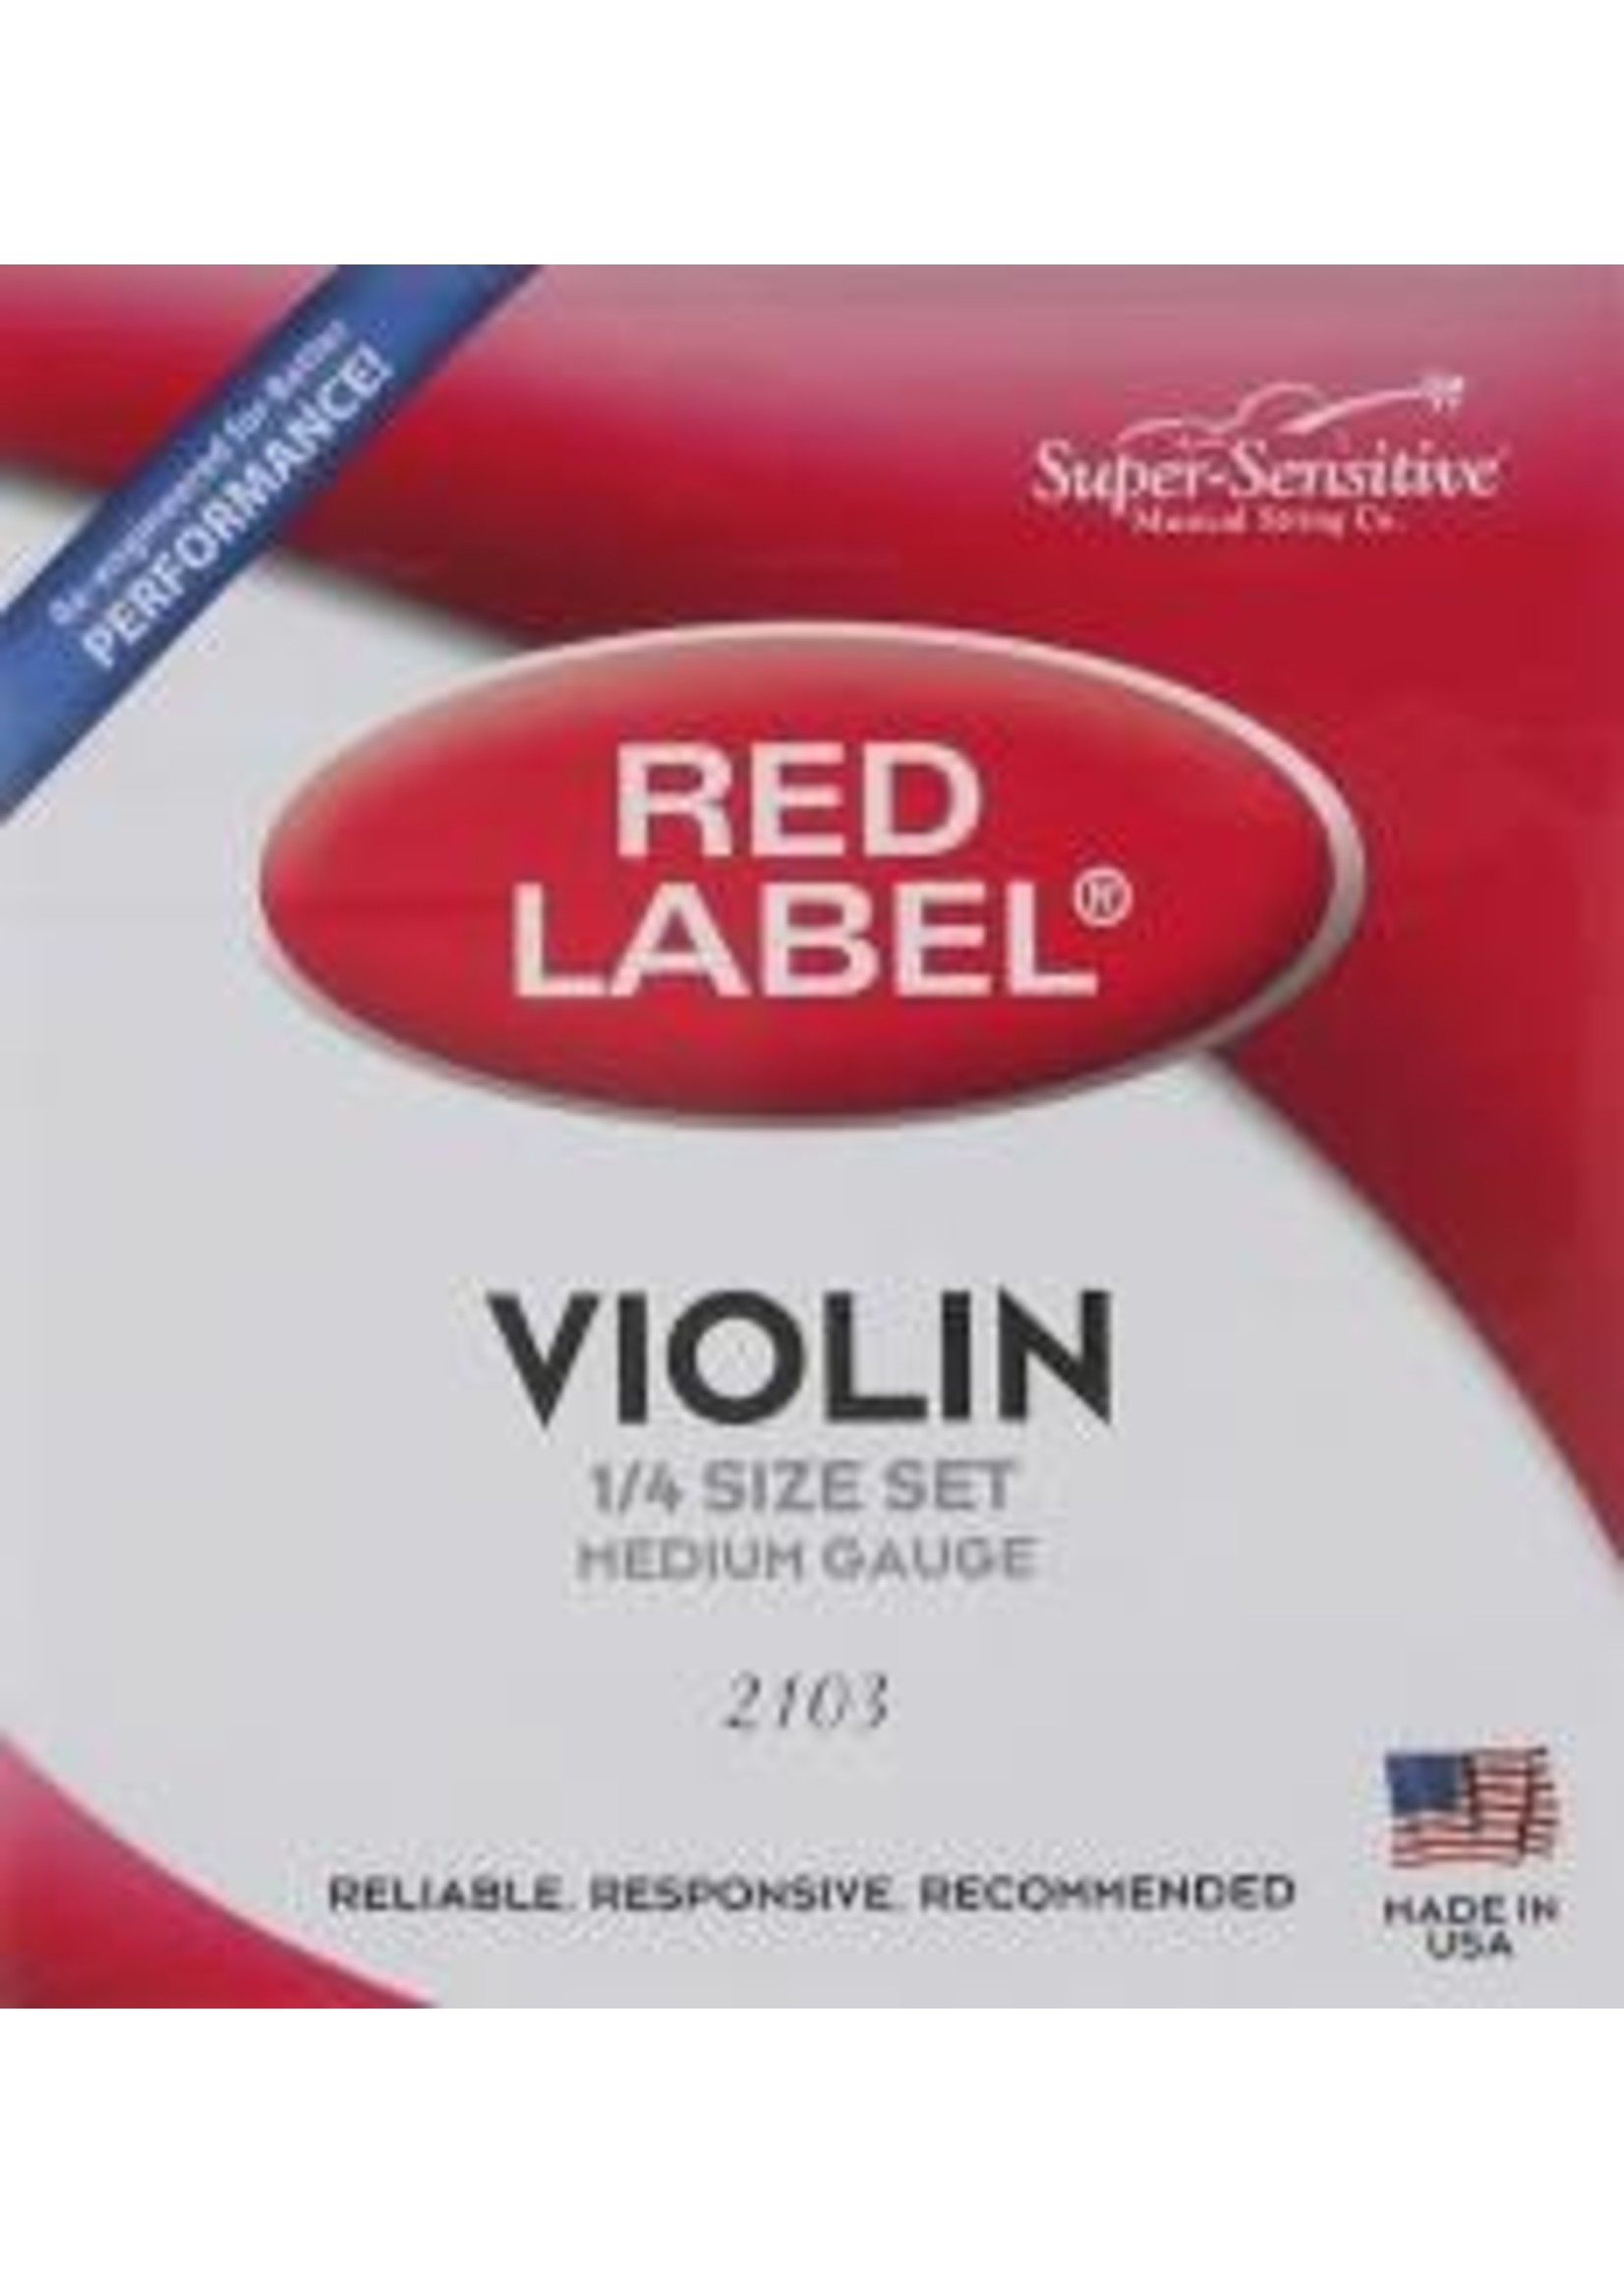 Red Label Red Label 1/4 Violin String Set - Medium